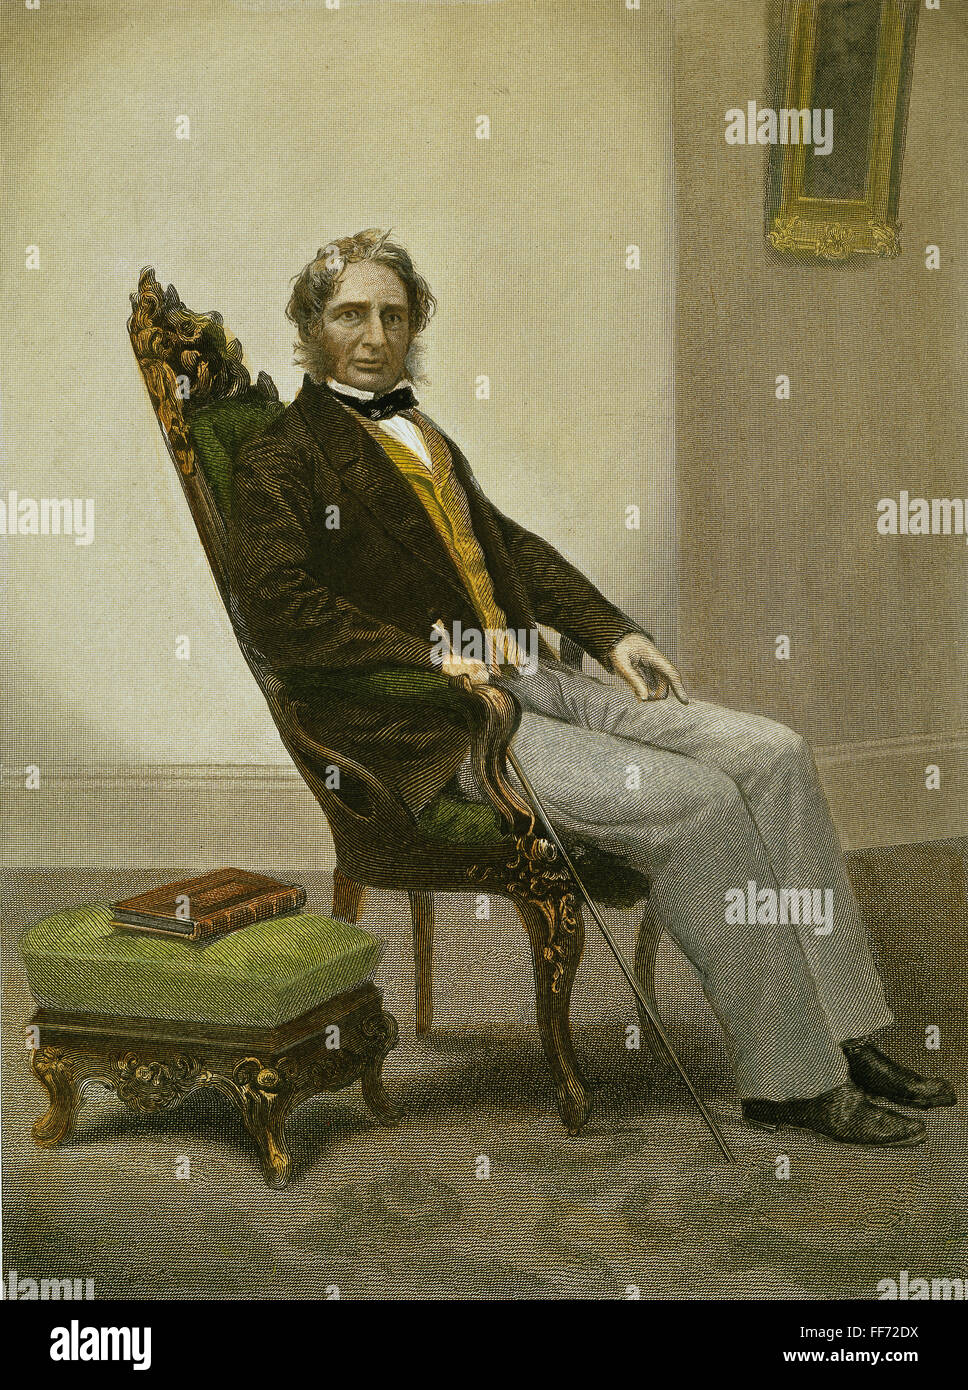 HENRY WADSWORTH LONGFELLOW /n(1807-1882). Amerikanischer Dichter. Farbe, Gravur, American, 1863. Stockfoto